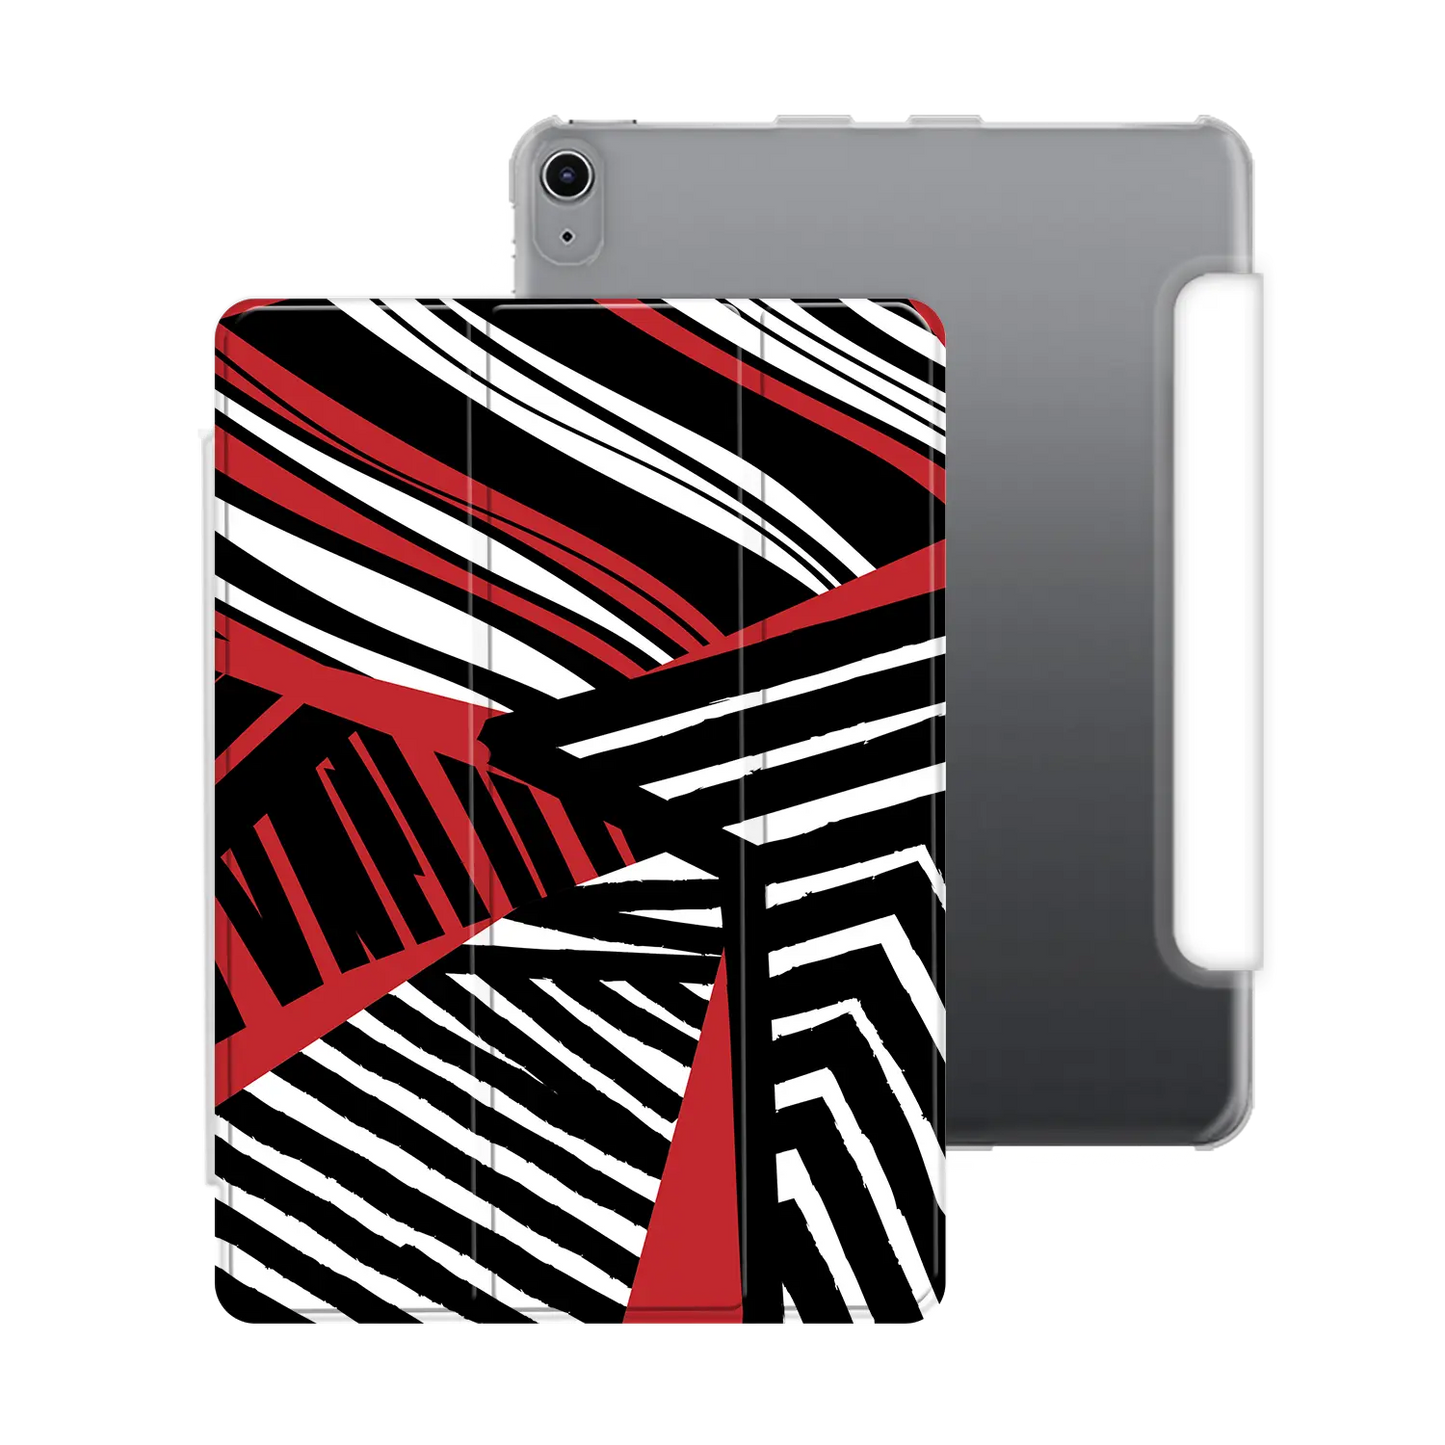 Stripes - Personalised iPad Case